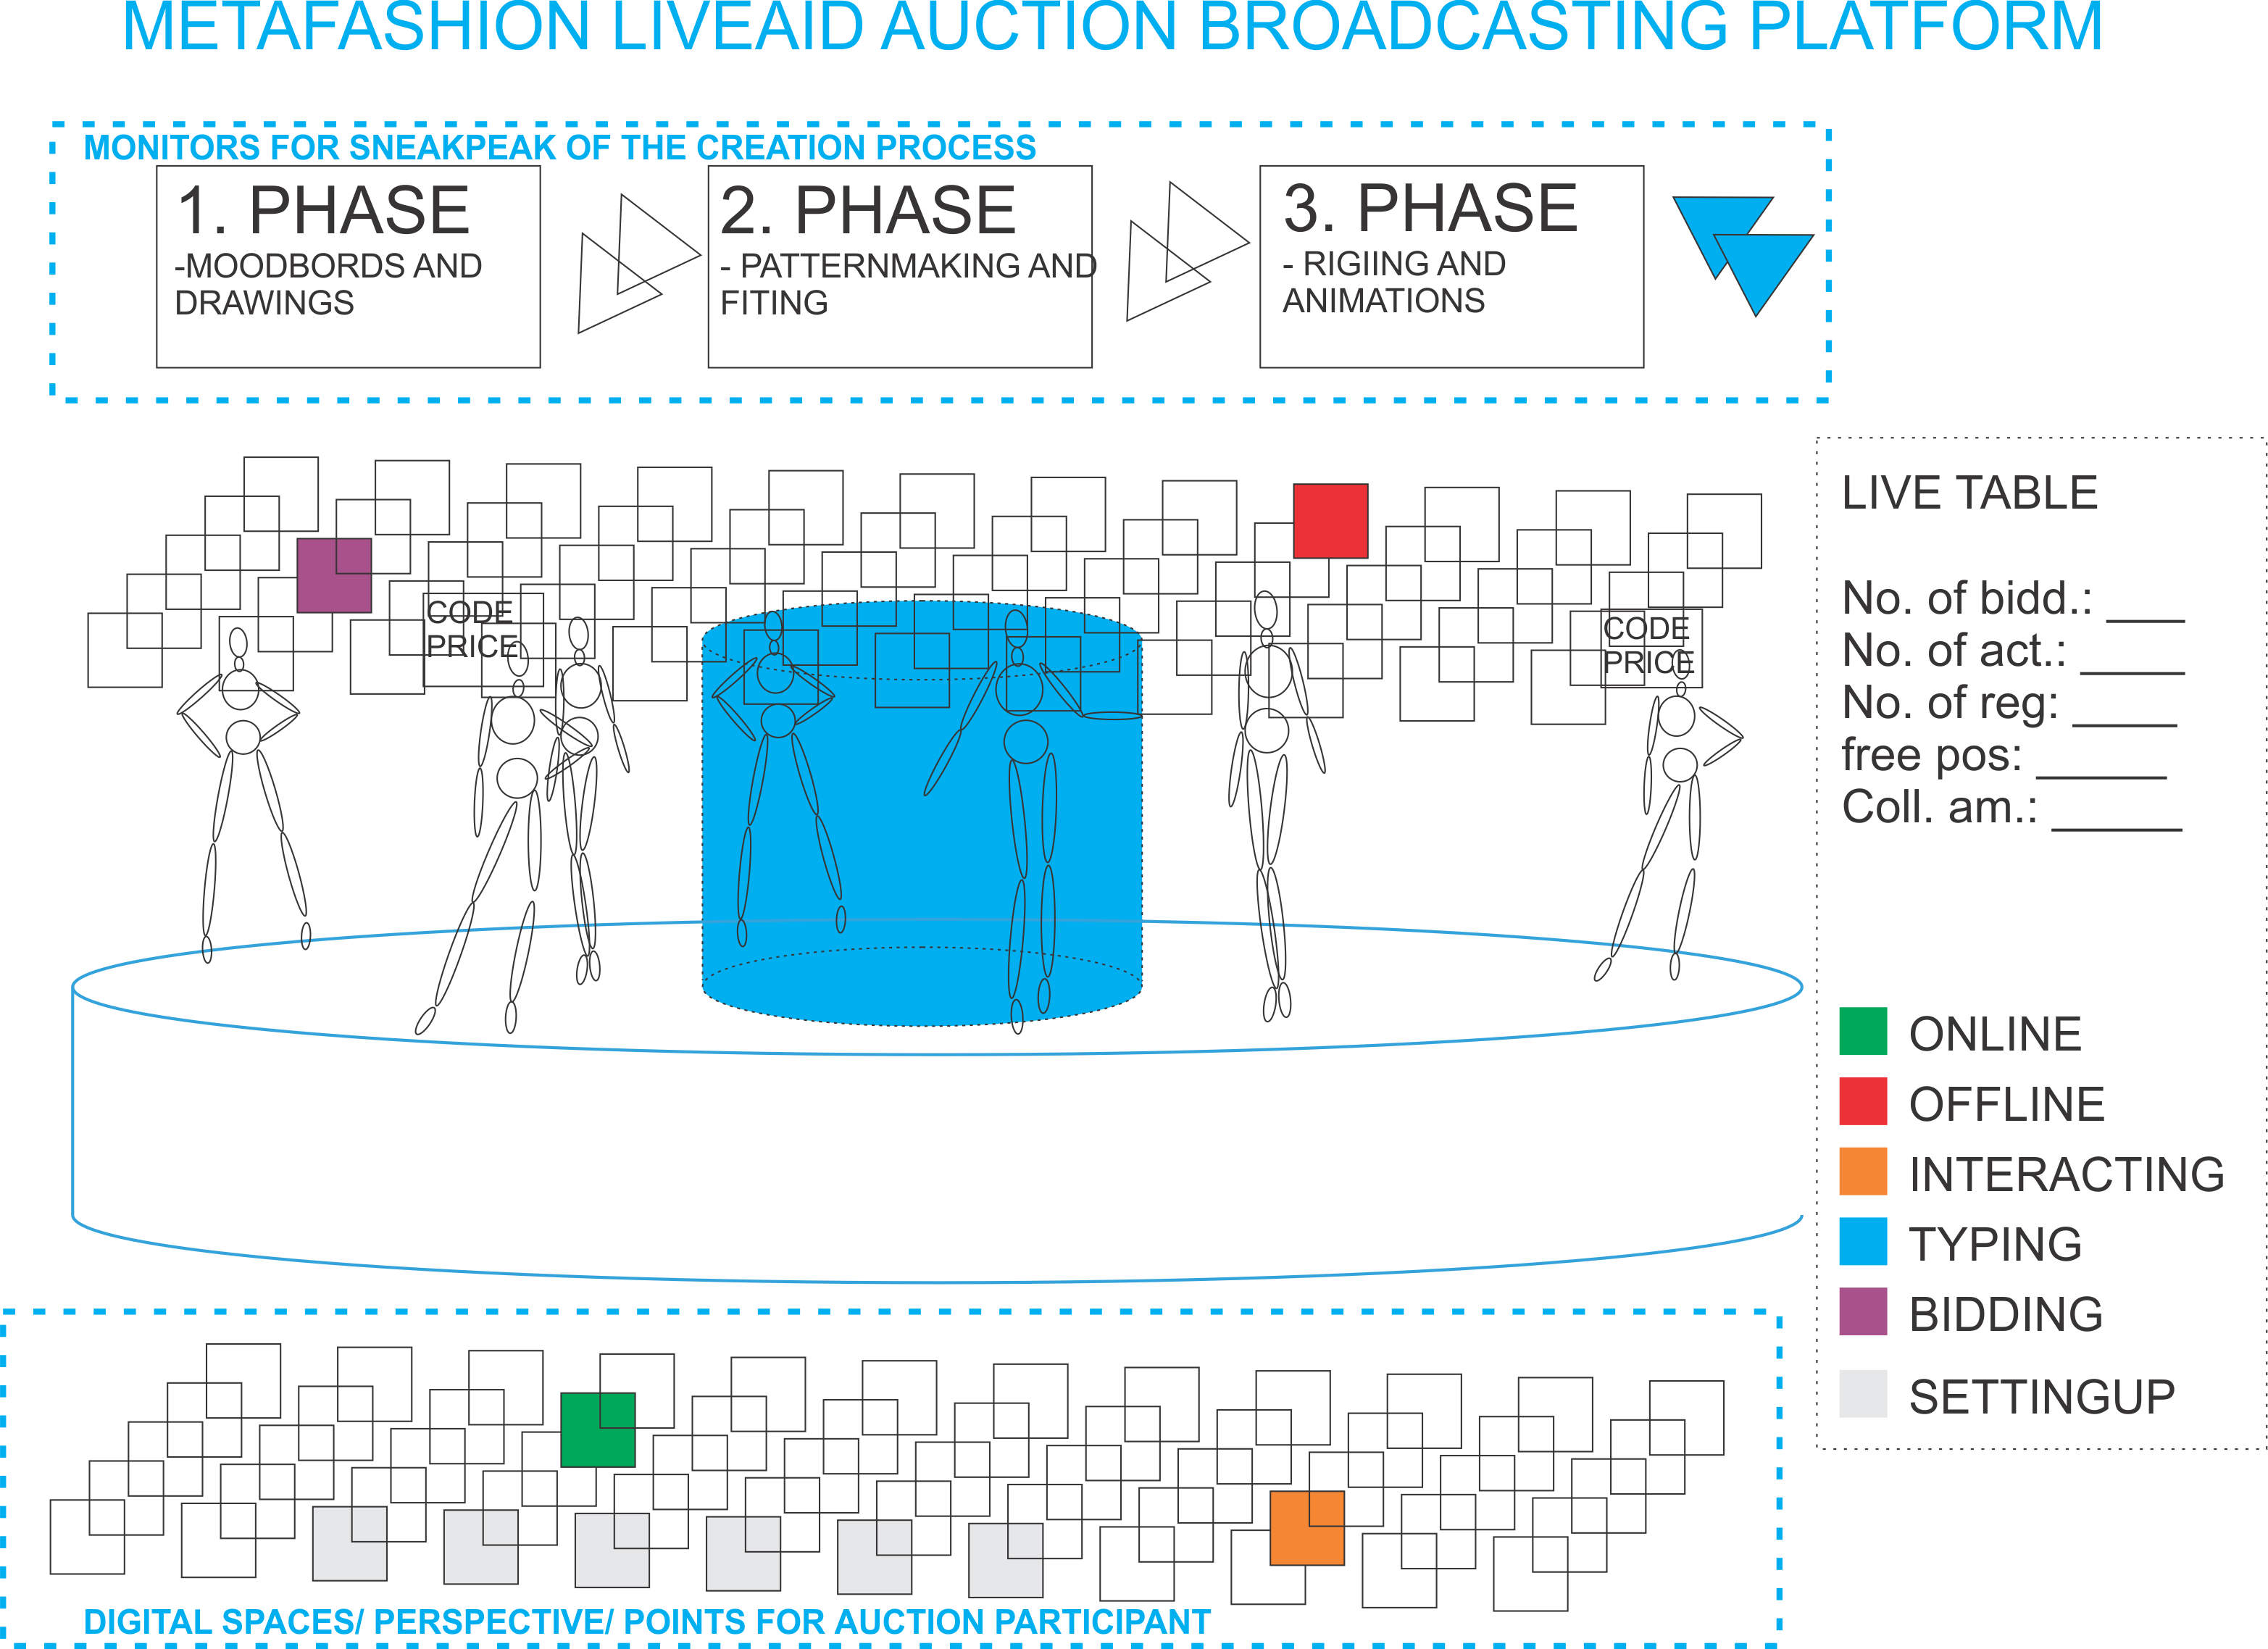 Image 2 Concept of the broadcasting platform